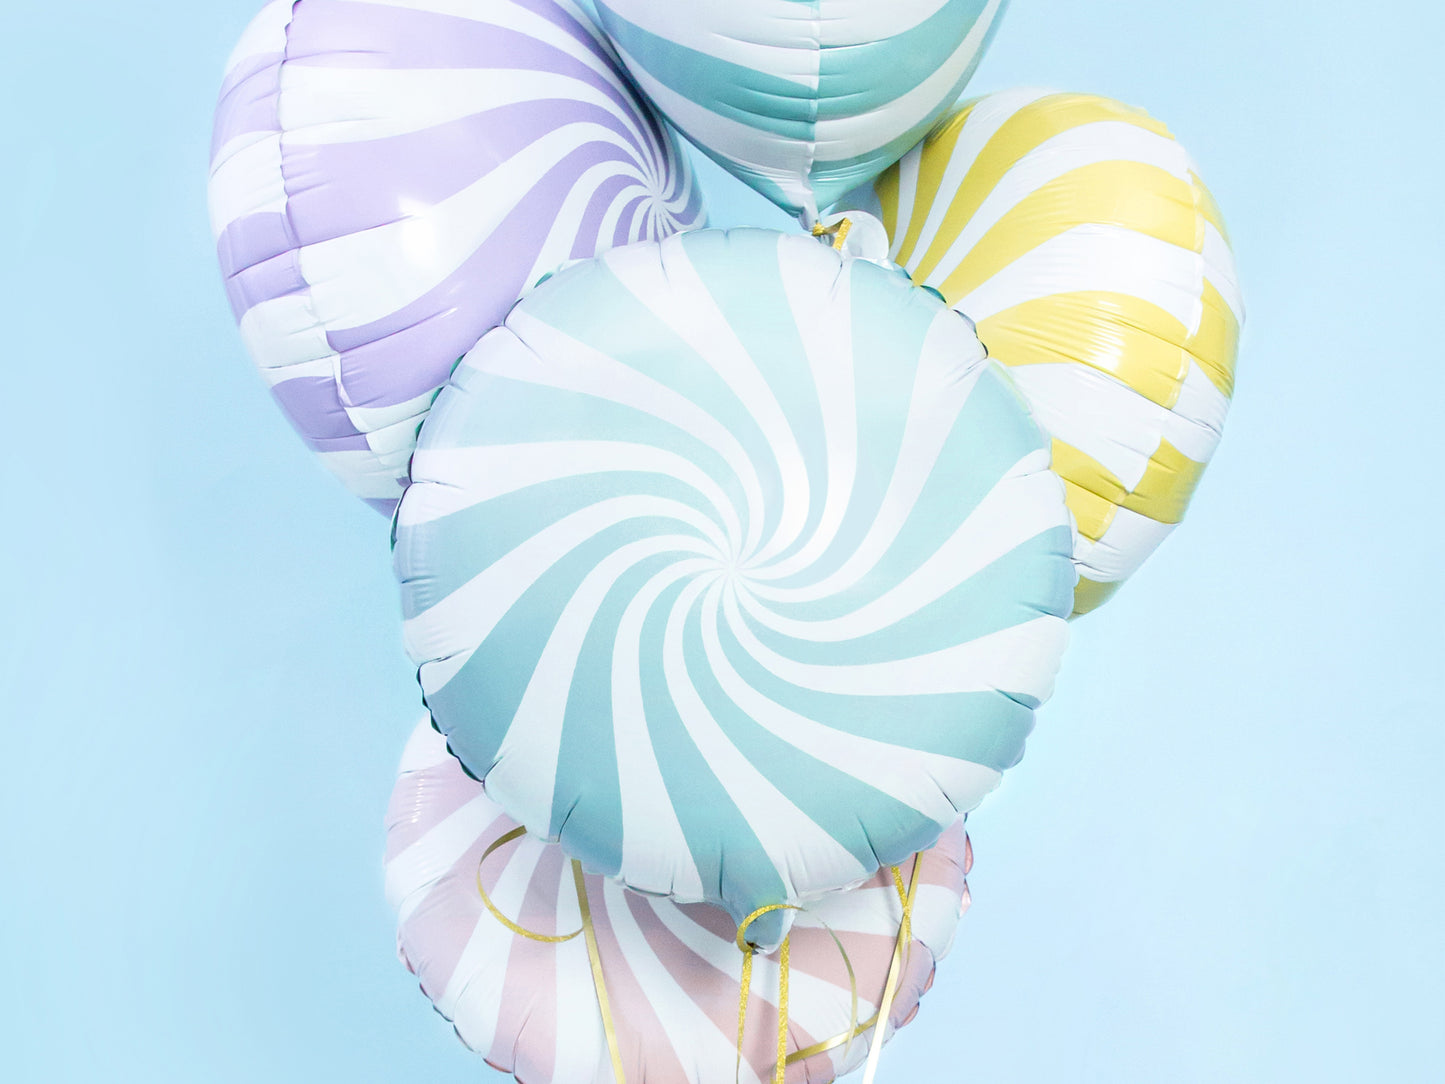 light blue white swirl candy balloon - glitter paper scissors